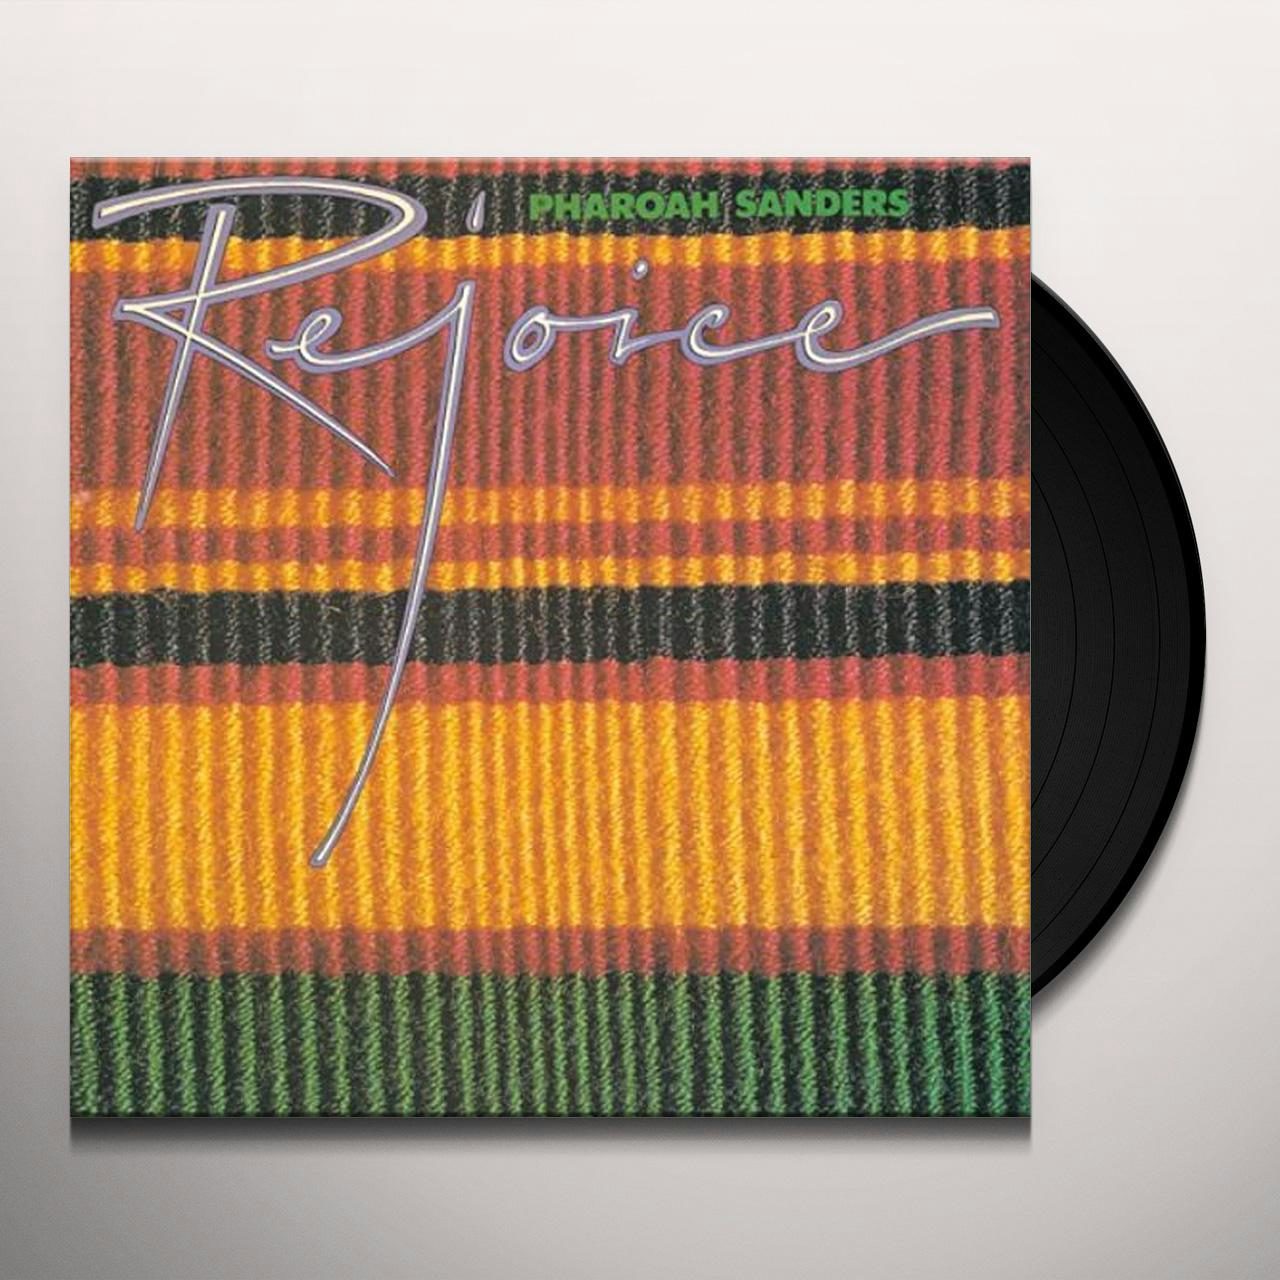 Rejoice Vinyl Record - Pharoah Sanders